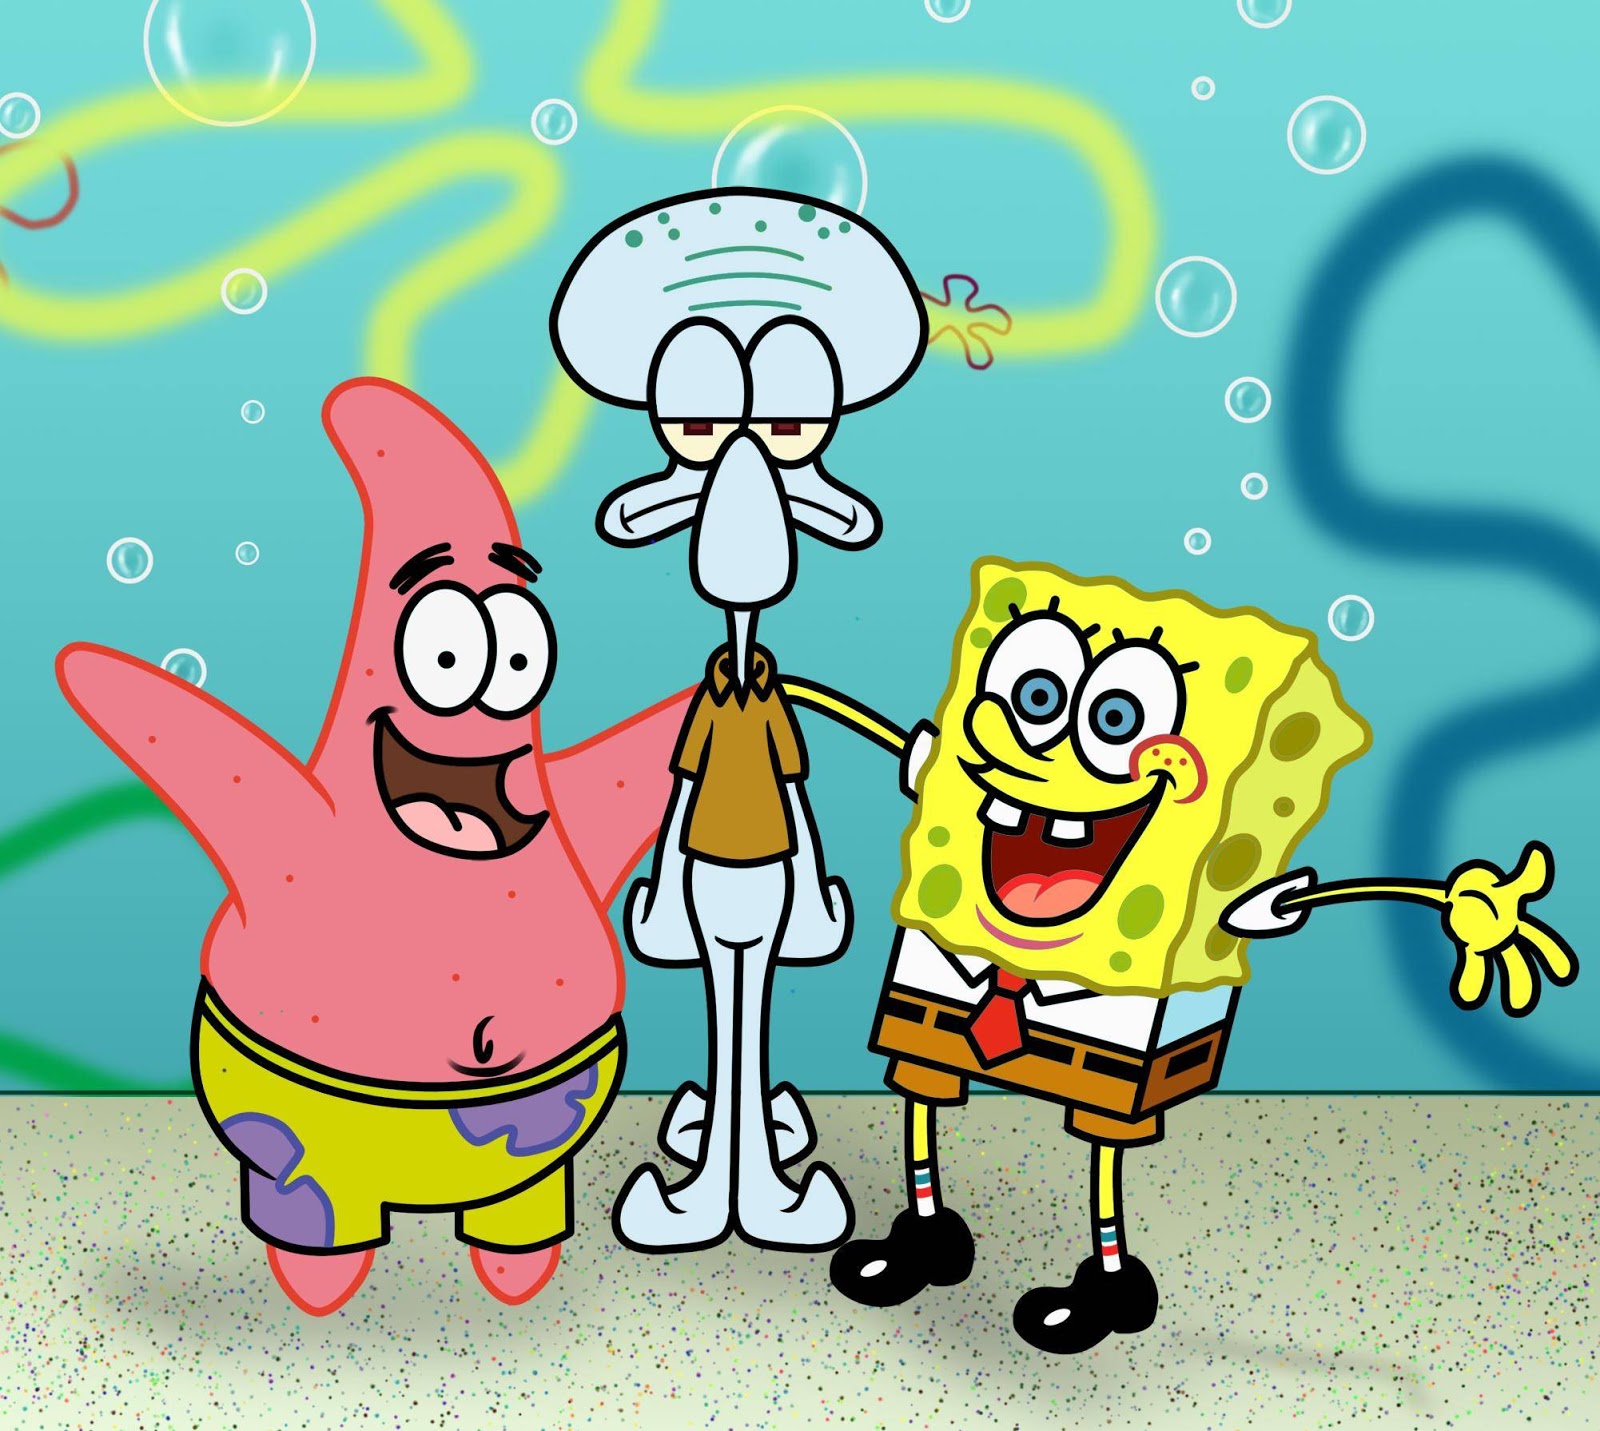 Gambar Dan Kata Kata Lucu Spongebob Stok Gambar Lucu